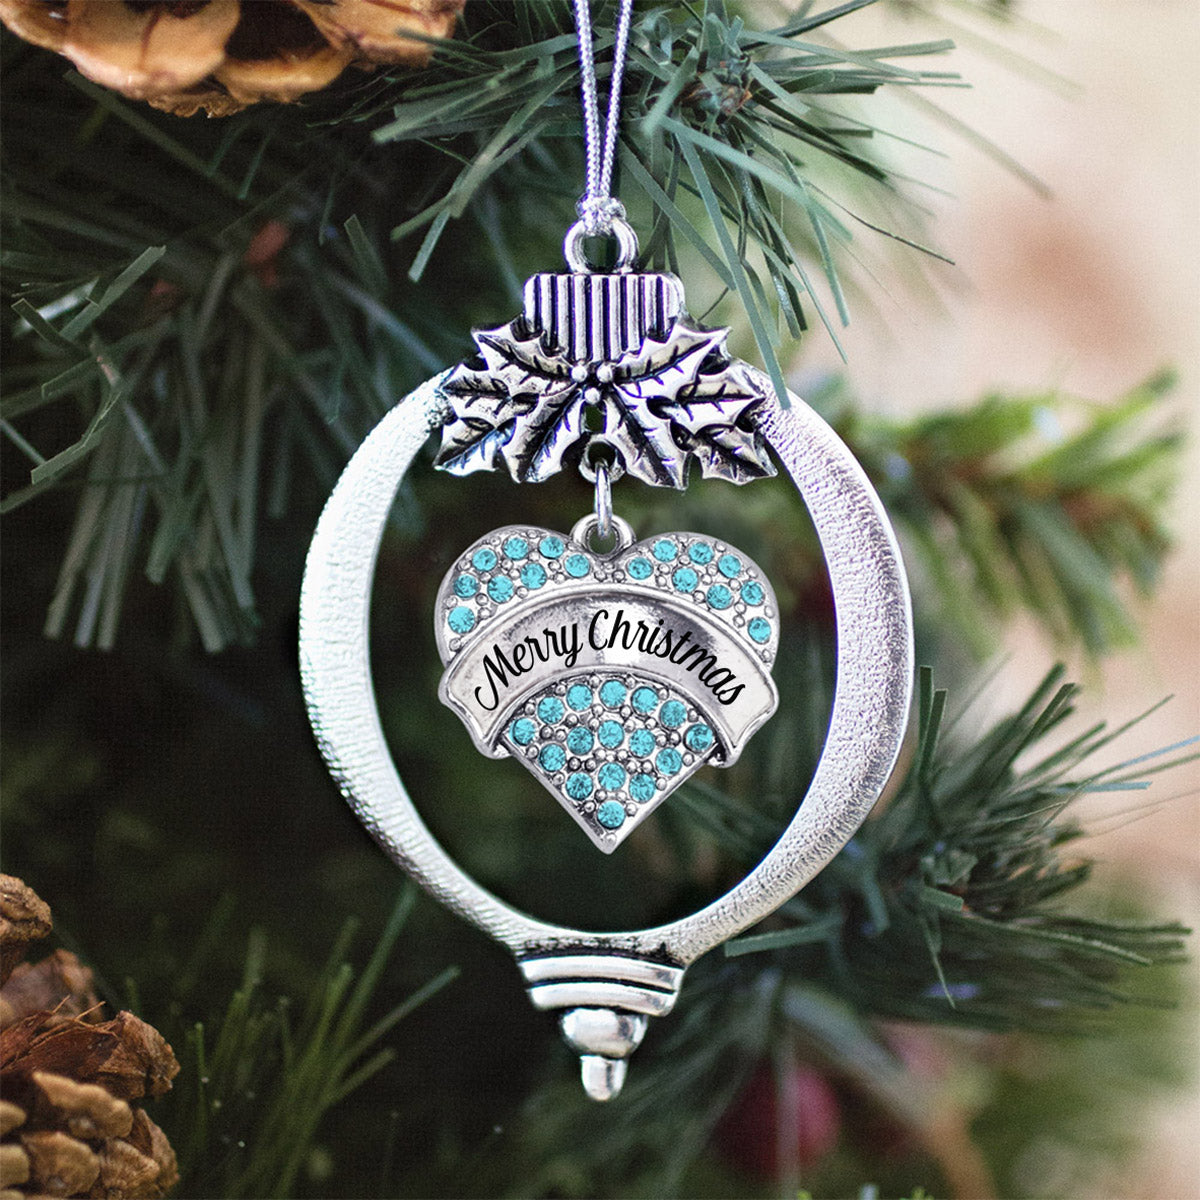 Silver Merry Christmas Aqua Aqua Pave Heart Charm Holiday Ornament